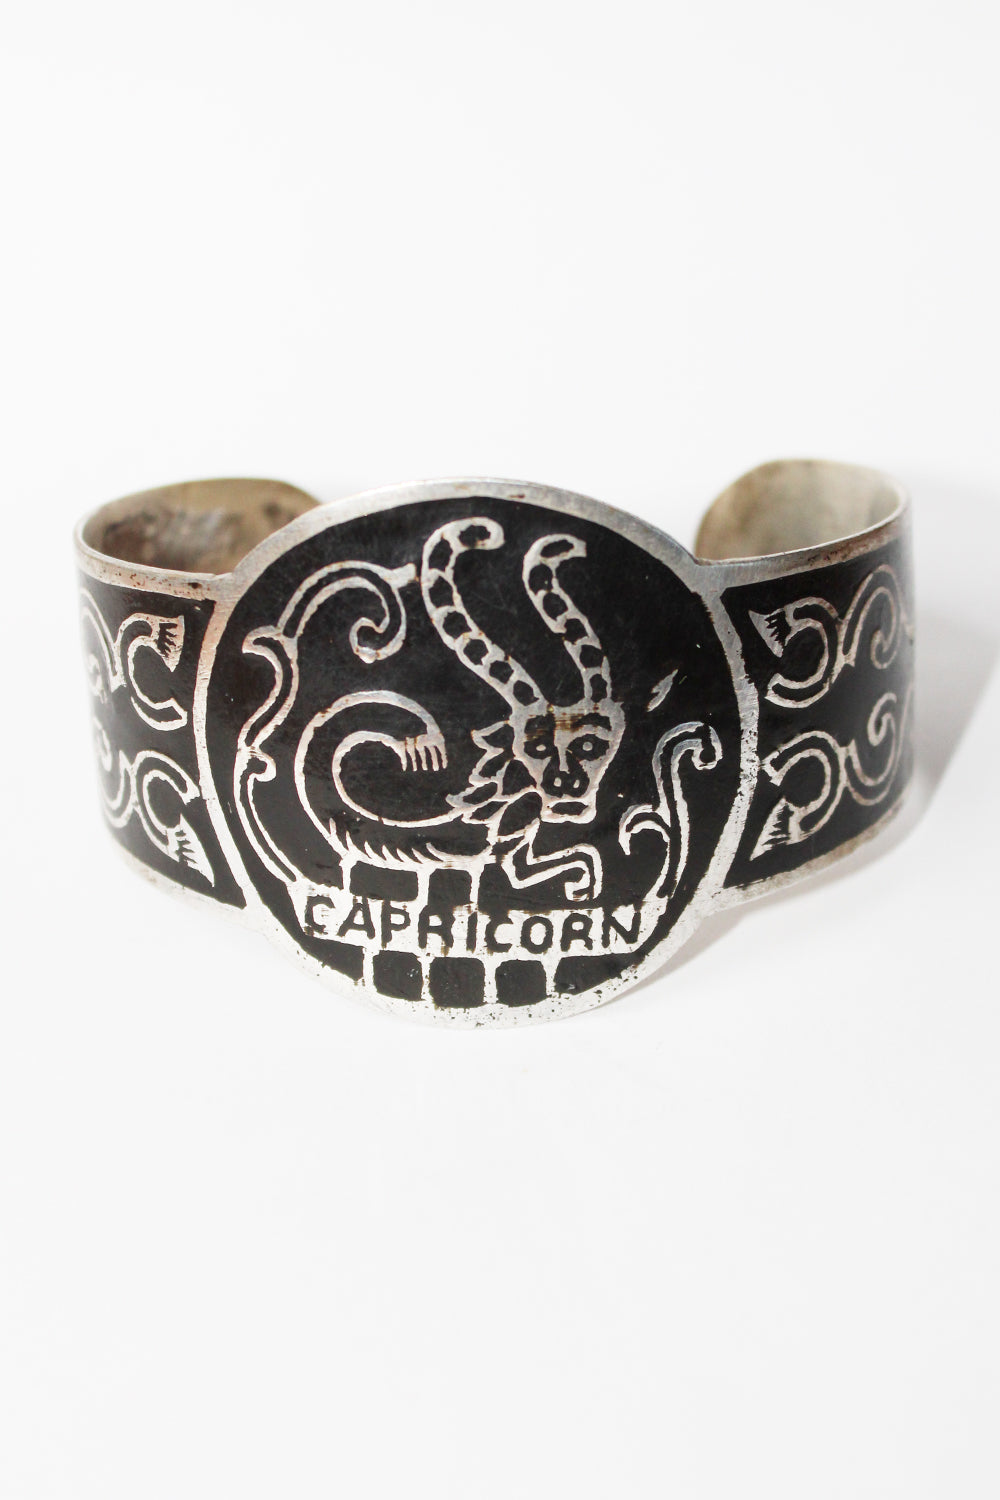 Vintage Steenbok sterrenbeeld armband